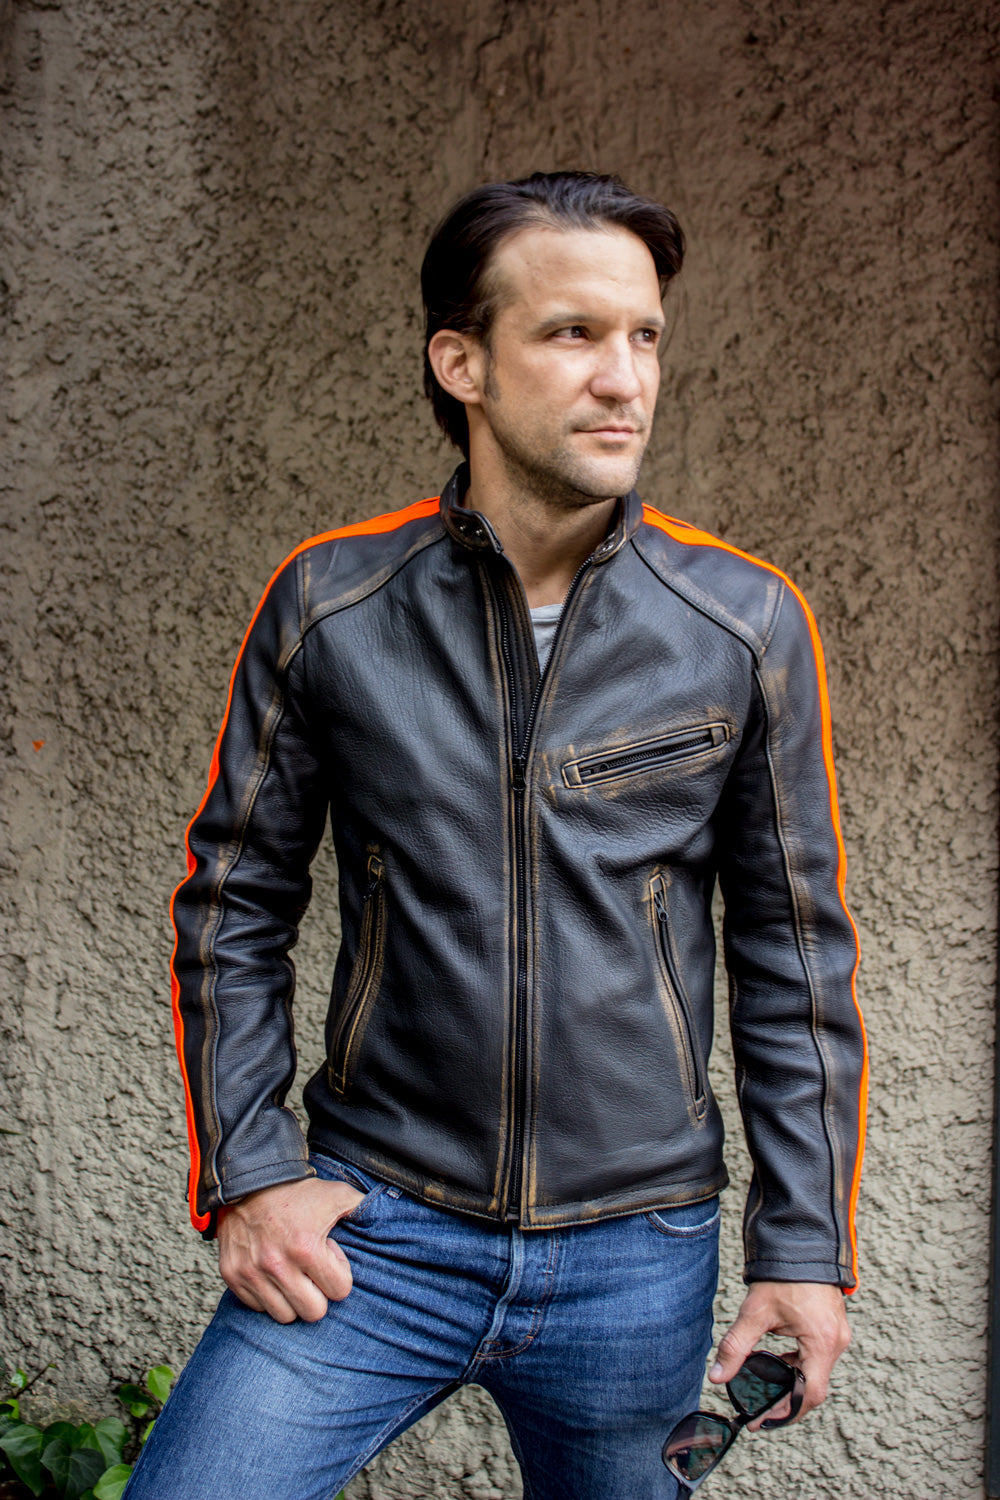 R80X Leather Jacket - Vivid Orange Stripes - Washed Distressed Black - Limited